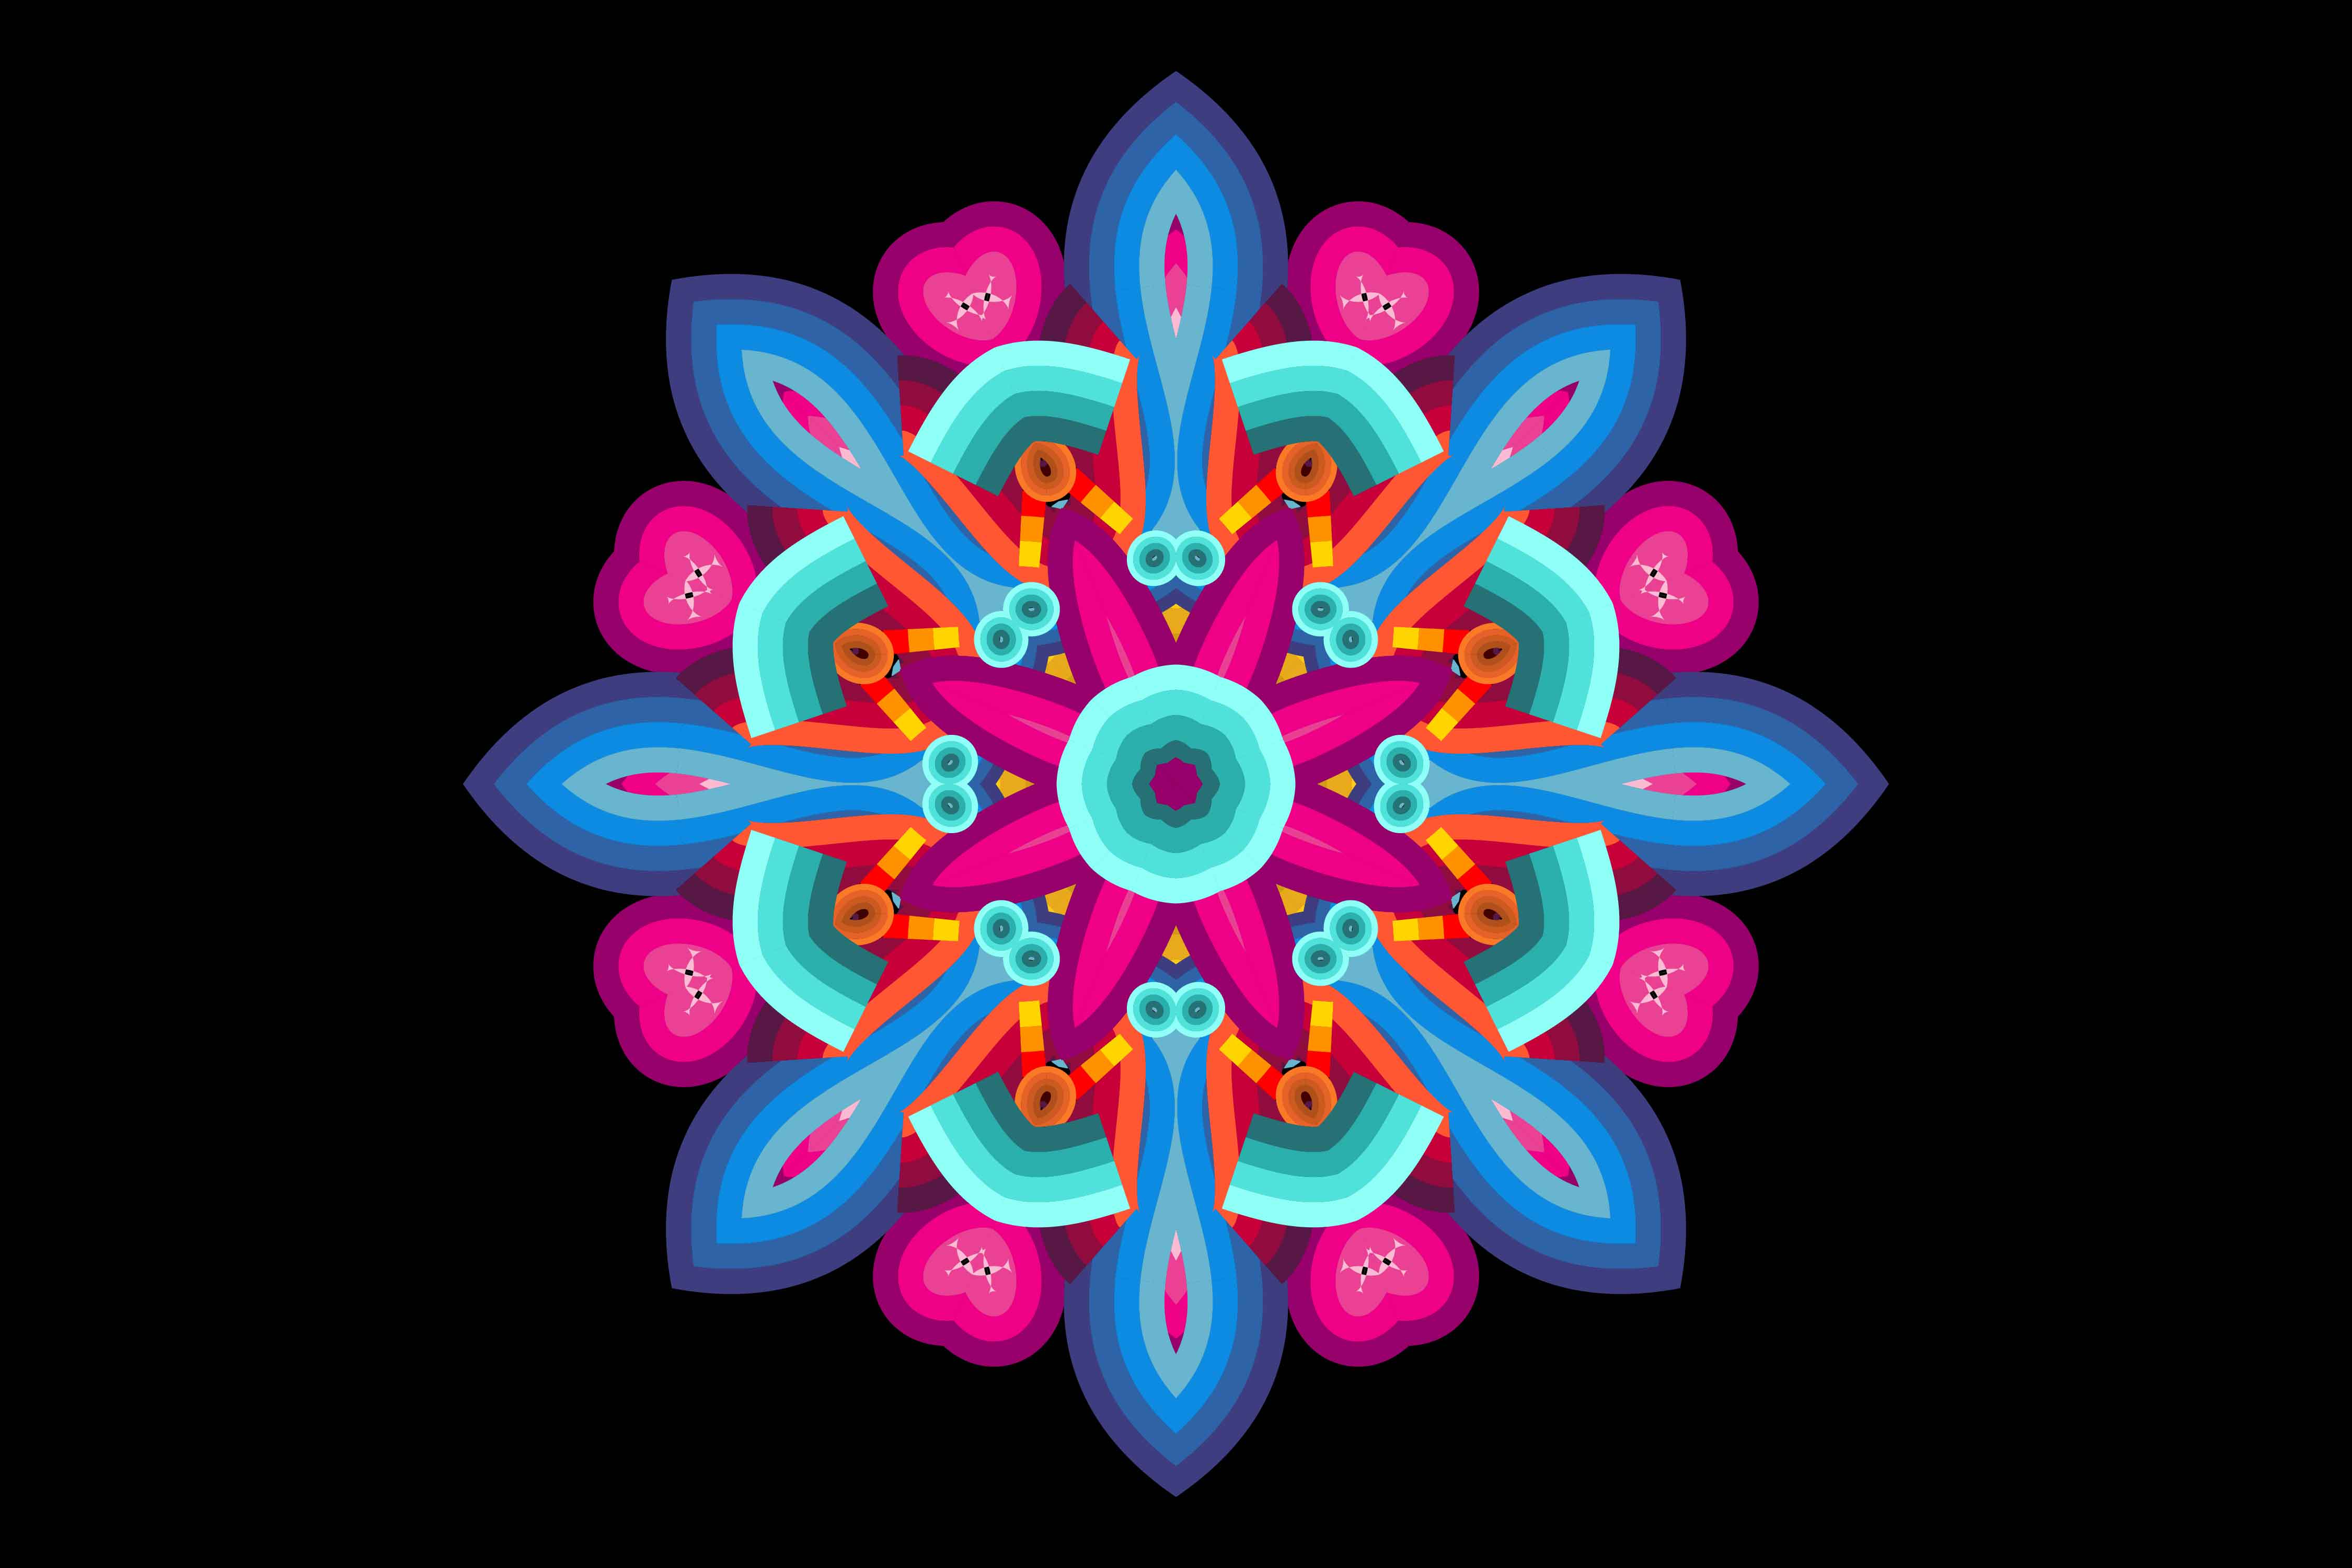 Mandala in a creative shape and colorful colors.